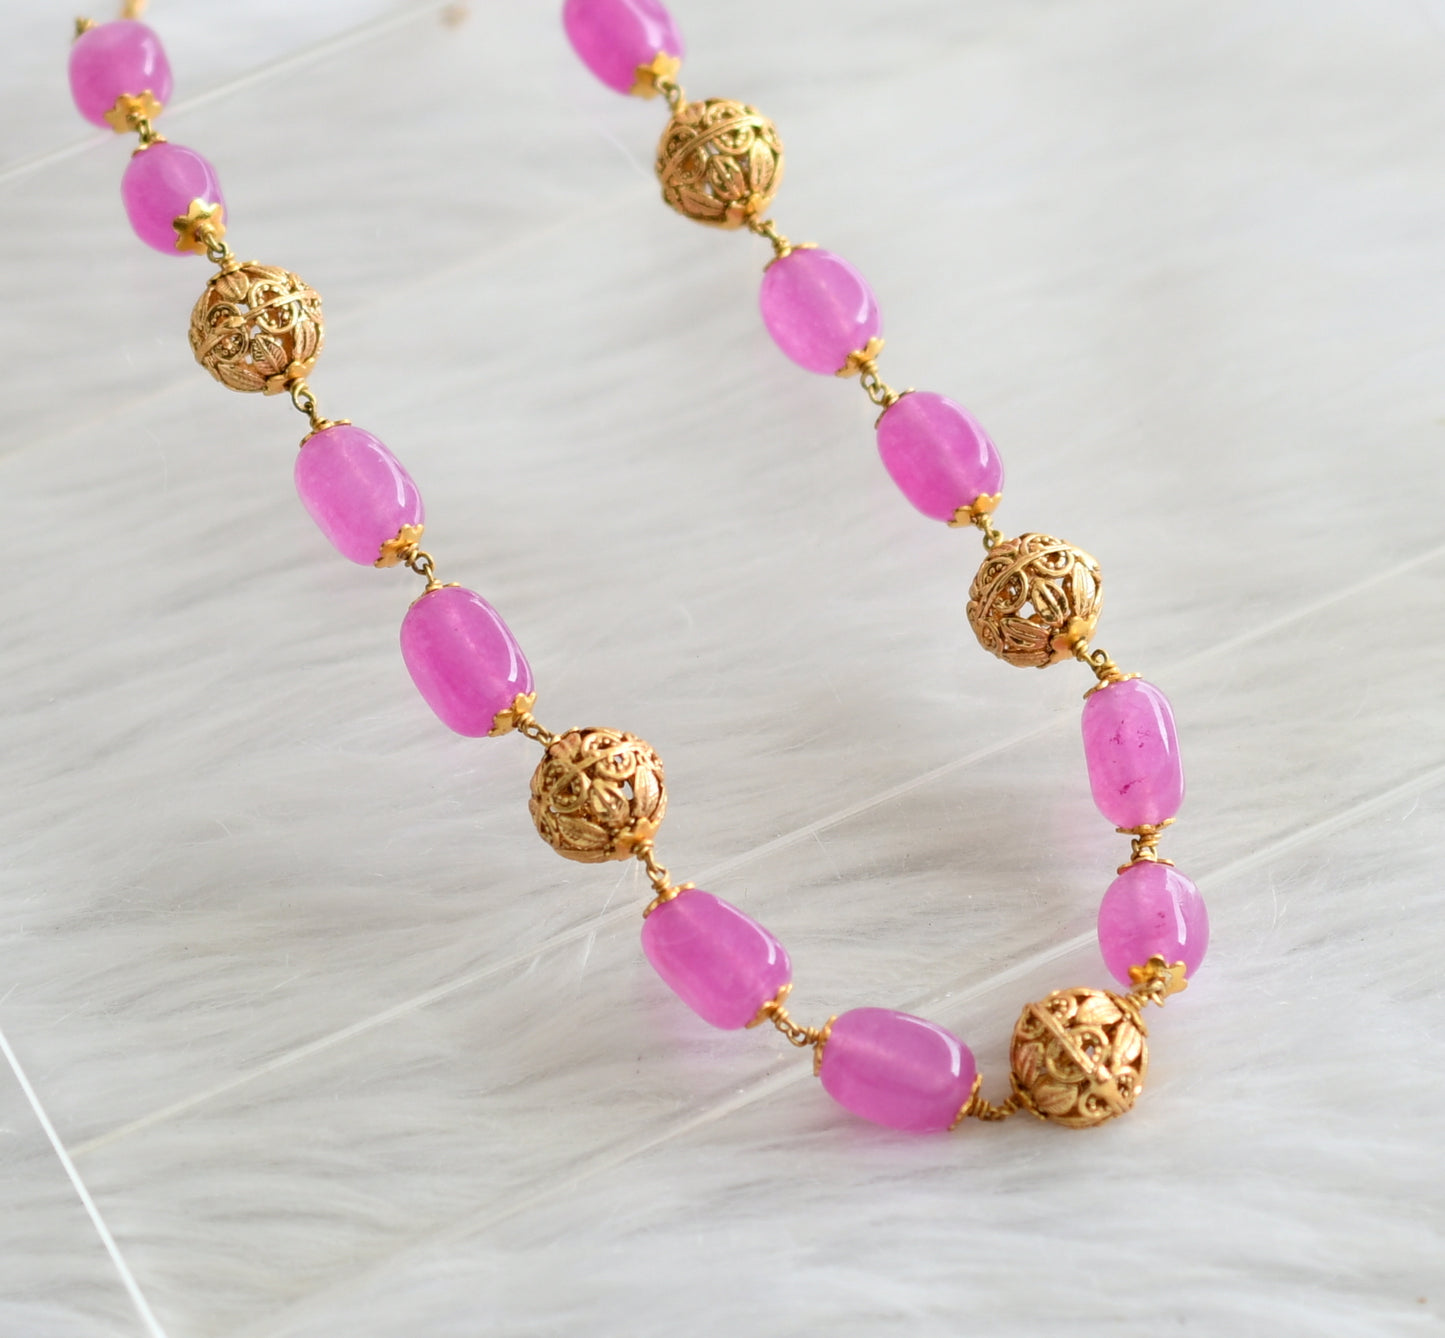 Antique gold tone pink beaded mala/necklace dj-44367